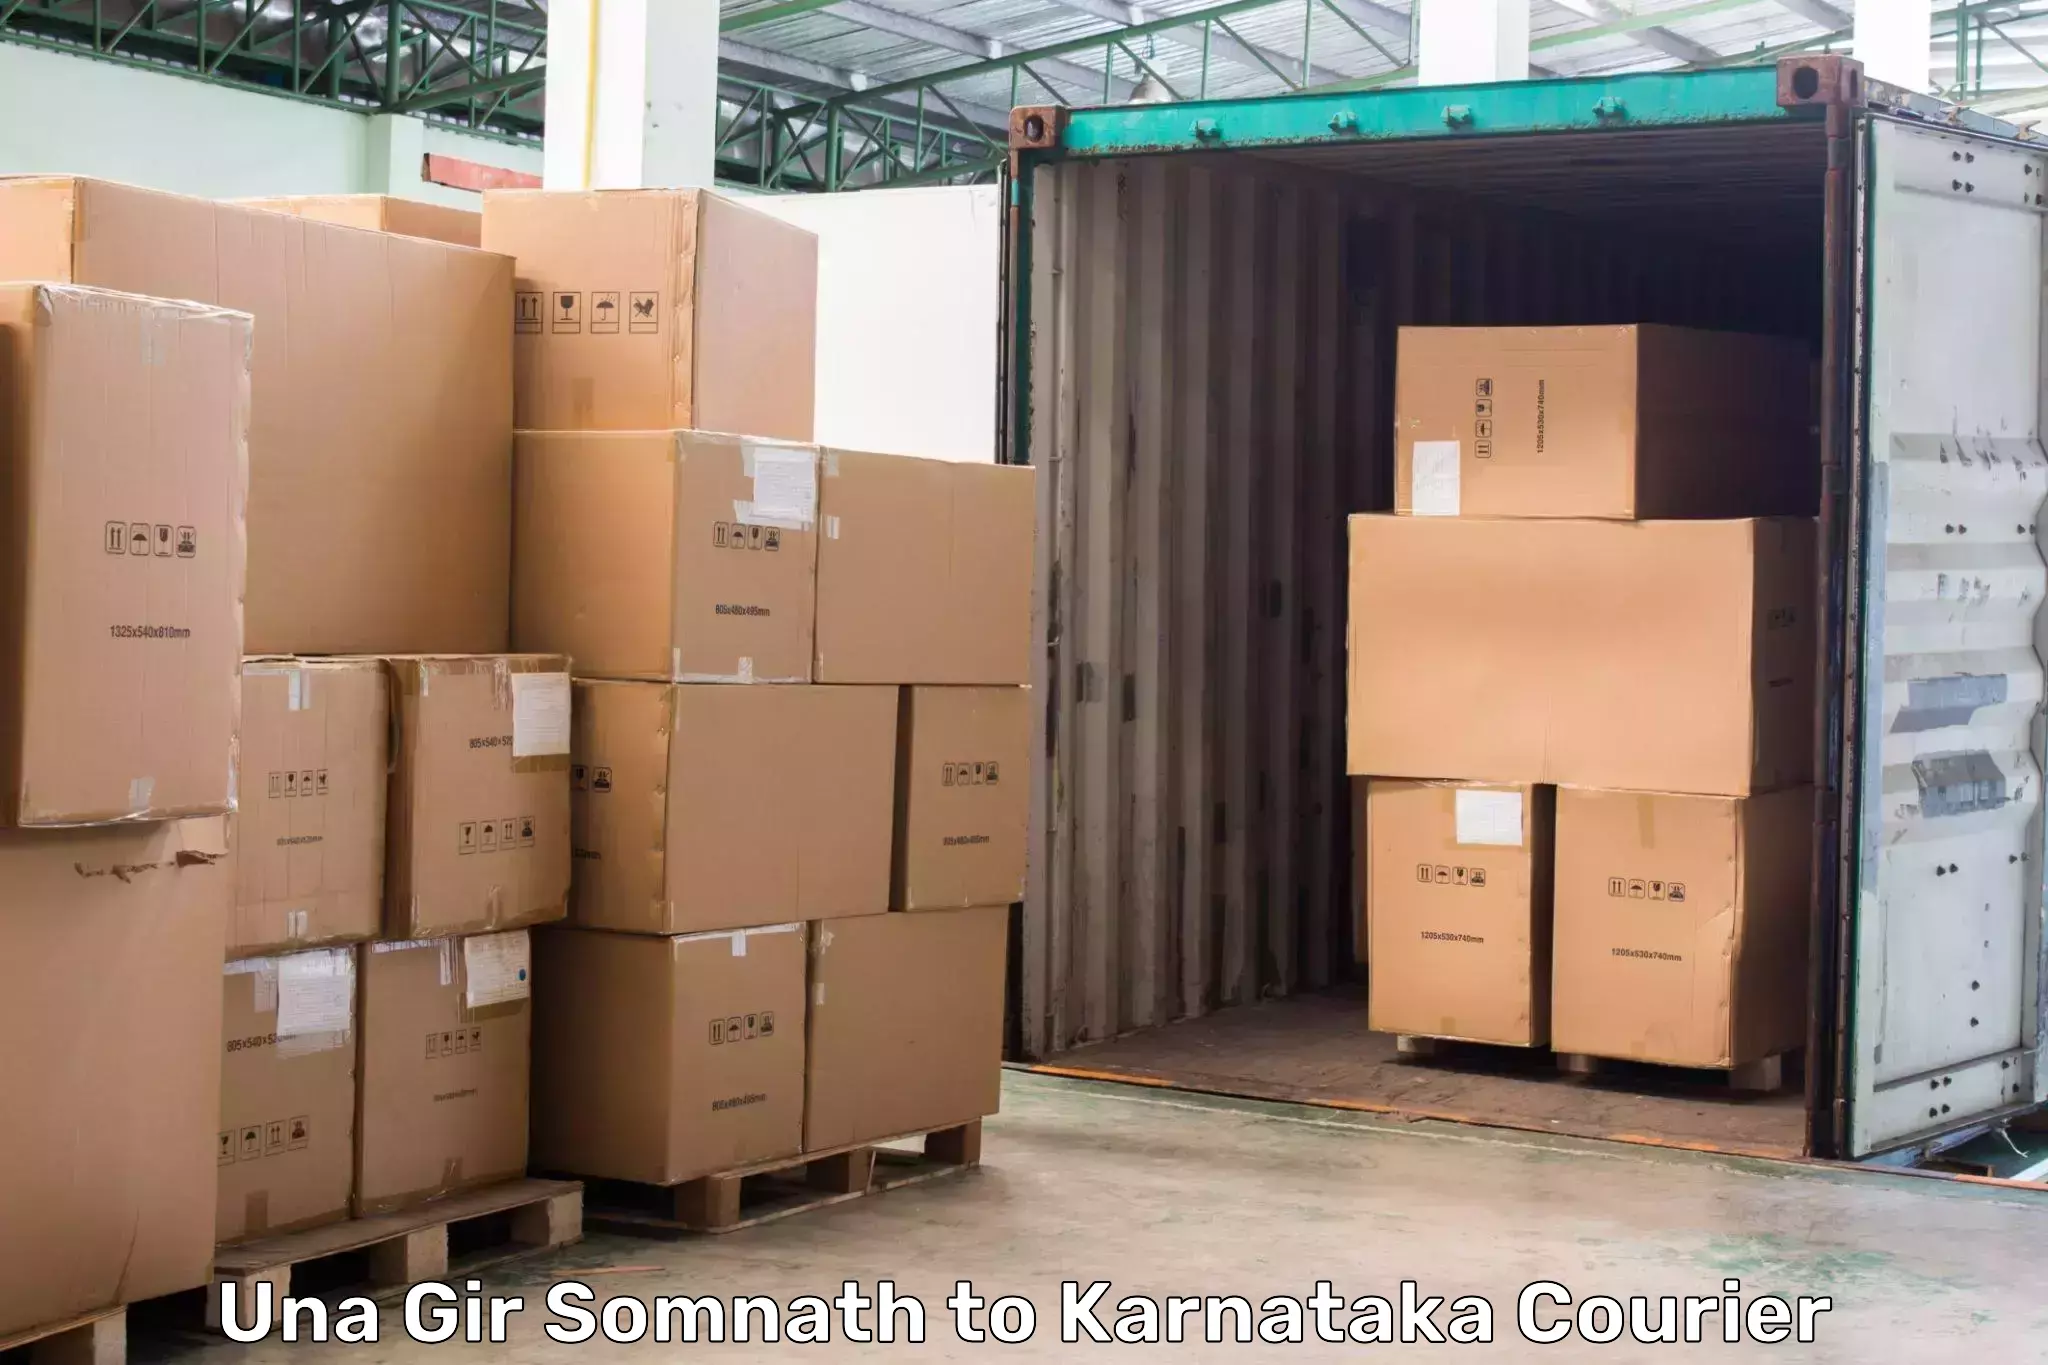 Tech-enabled shipping Una Gir Somnath to Kundapura